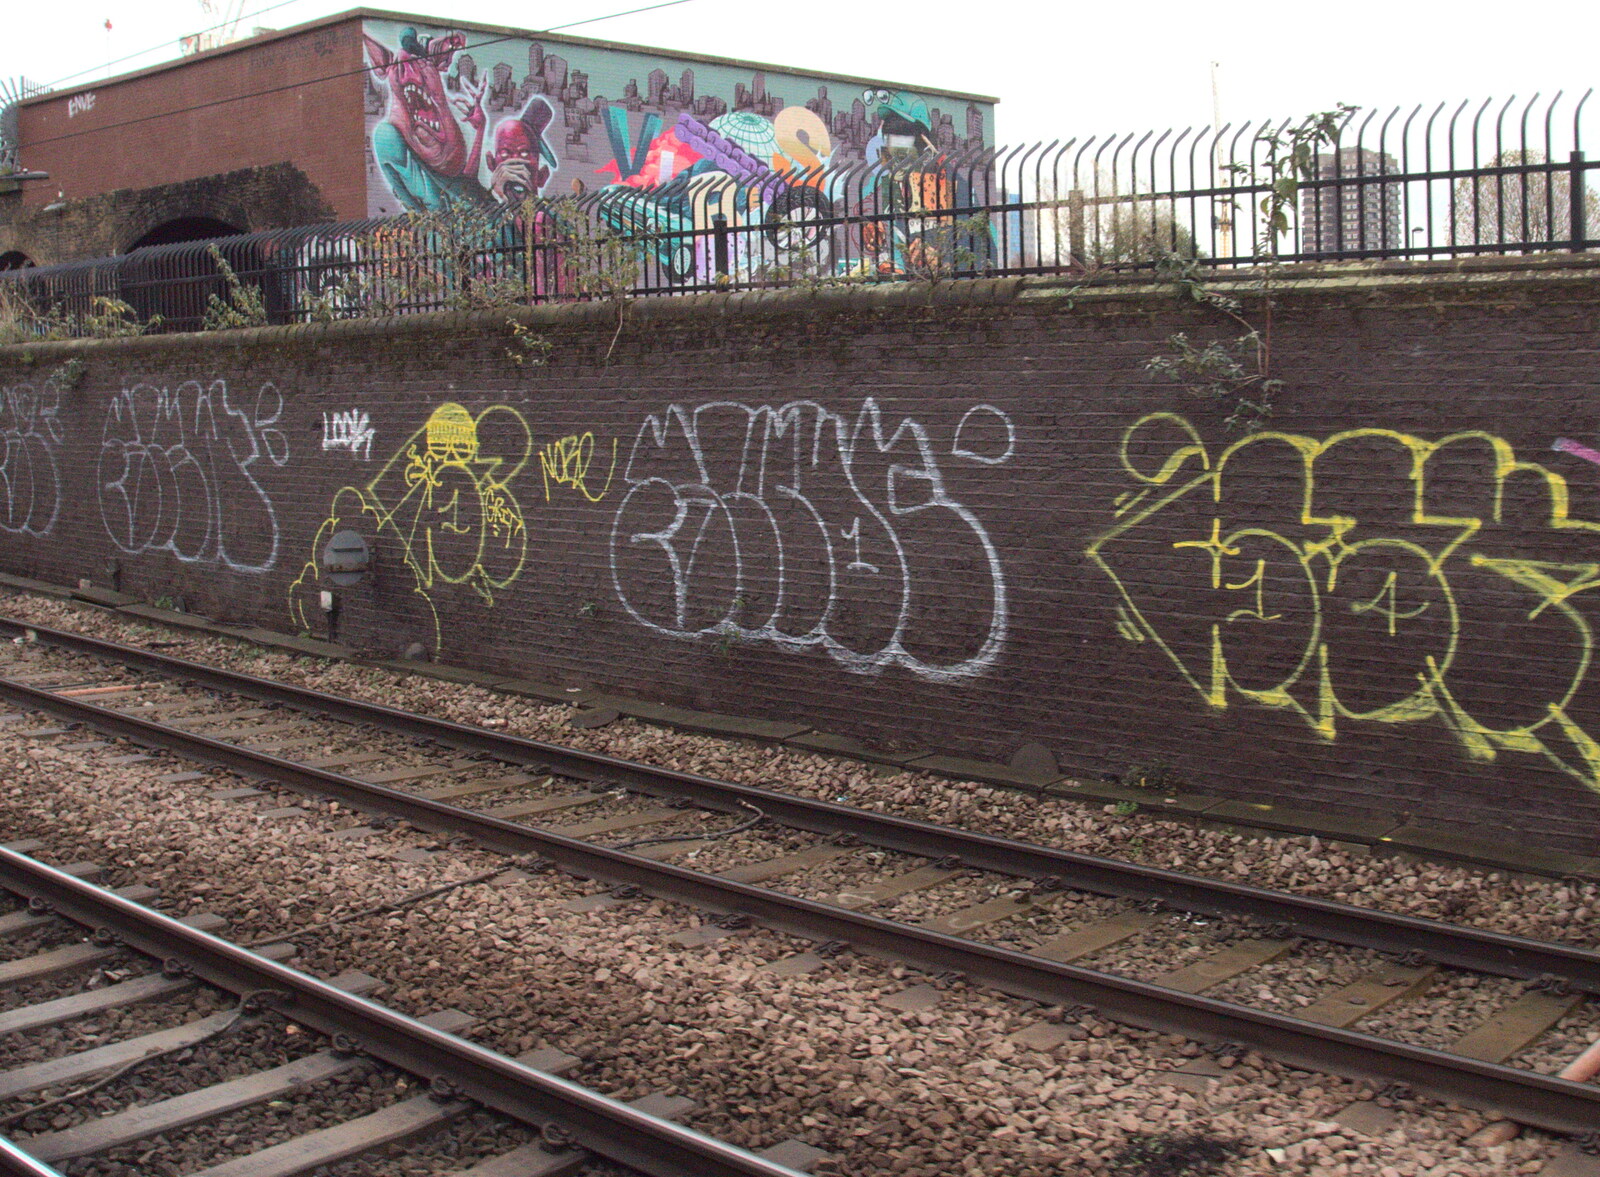 More graffiti, near the Brick Lane bridge from A Melting House Made of Wax, Southwark, London - 12th November 2014